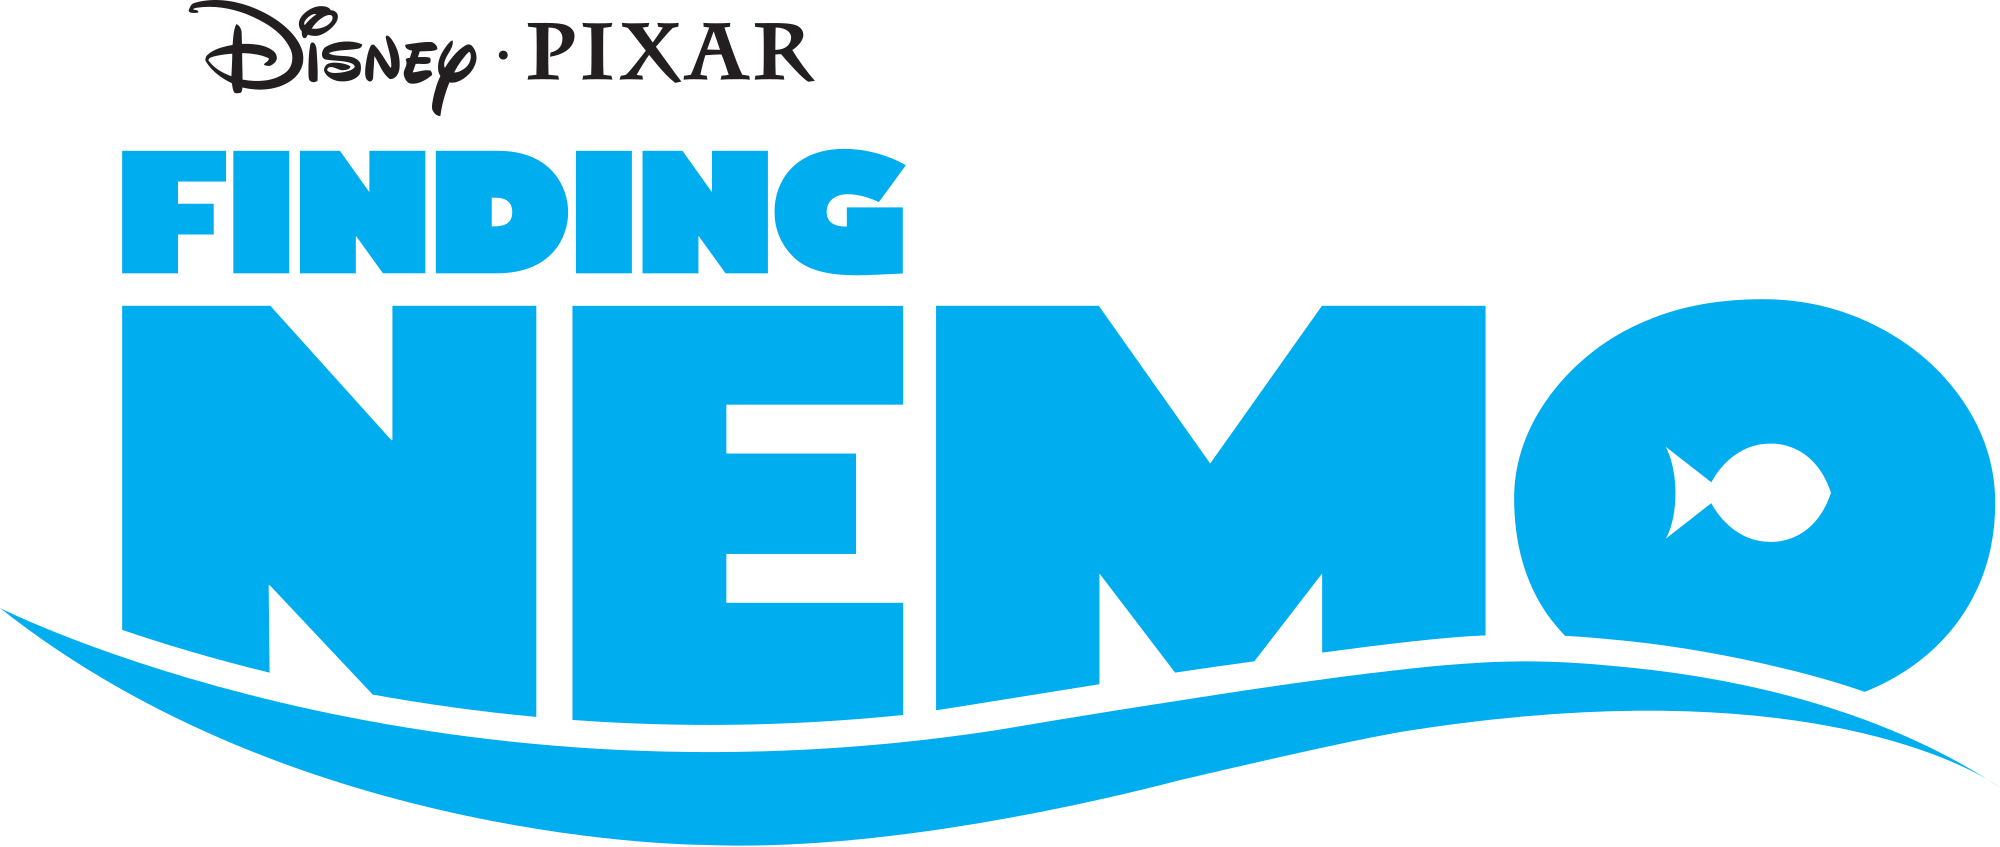 Disney Pixar Finding Nemo Logo - File:Finding Nemo logo.svg - Wikimedia Commons